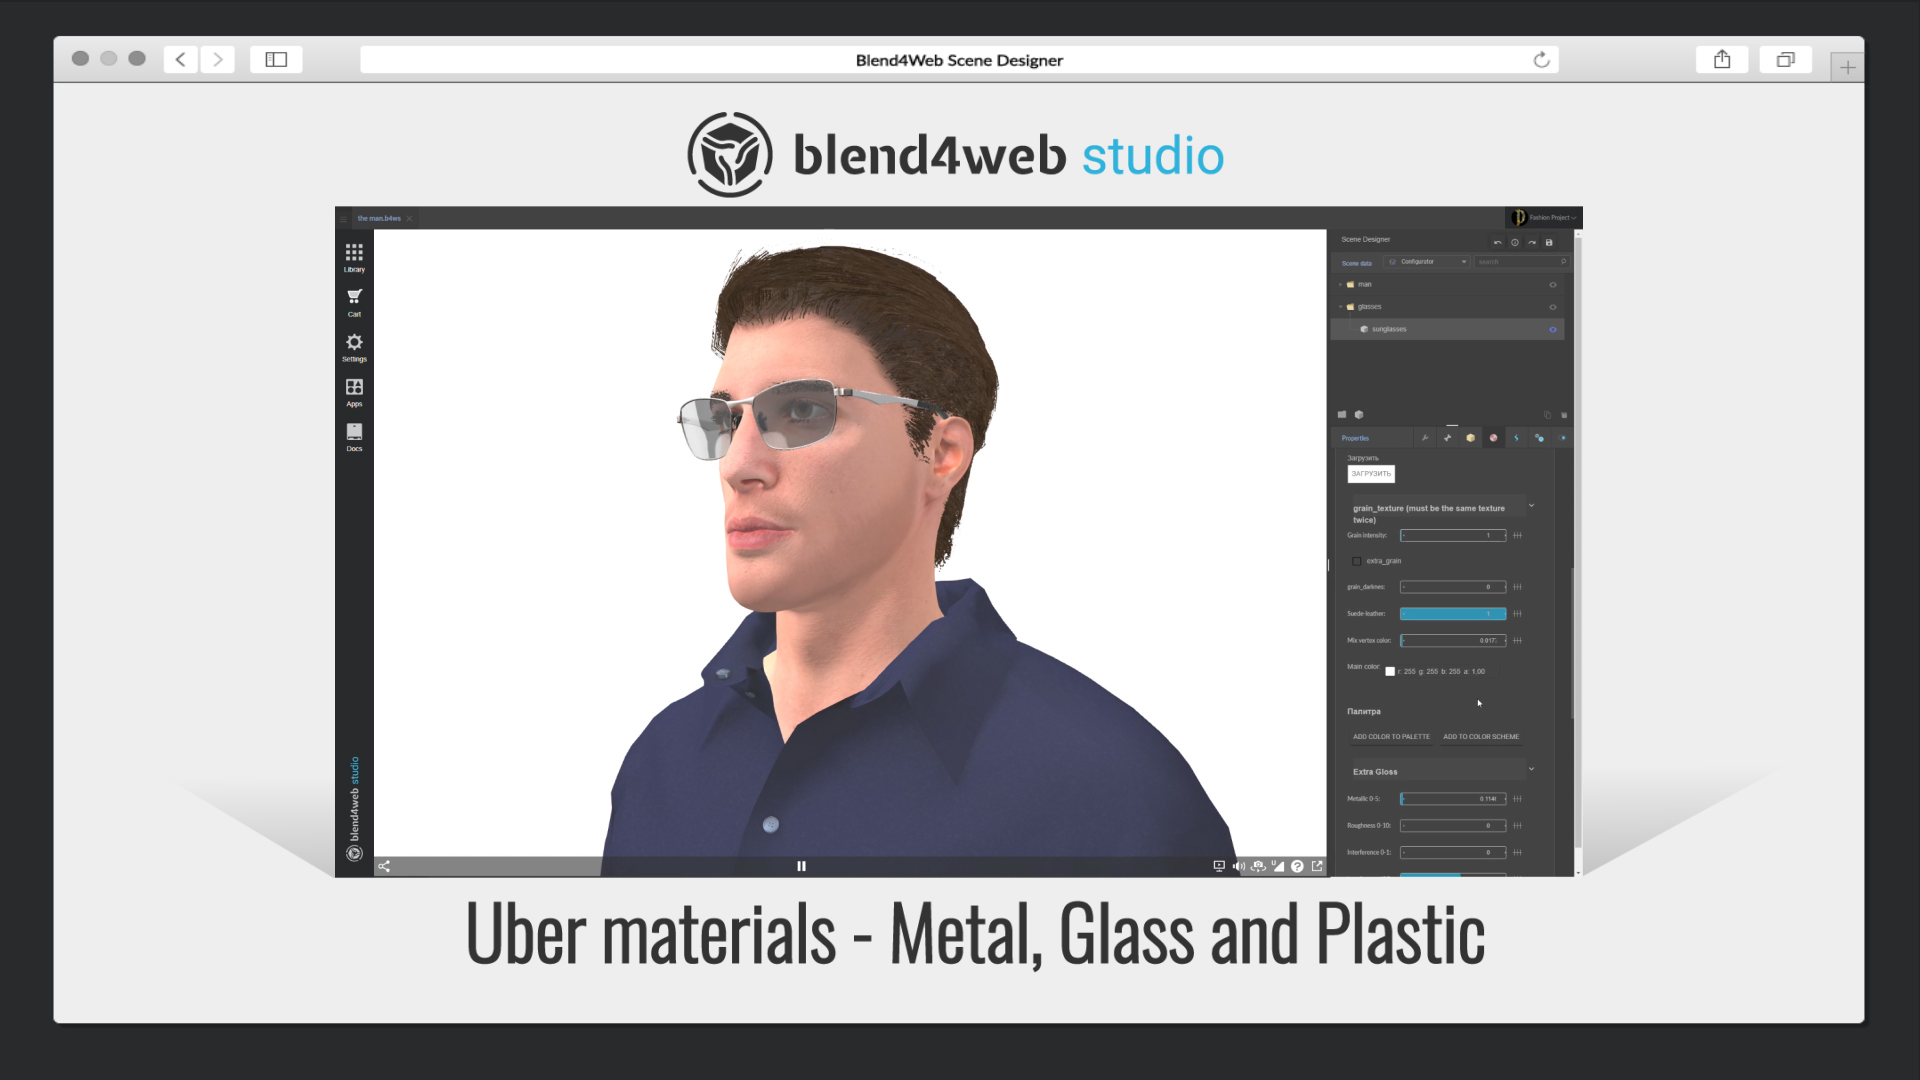 Metal, Glass and Plastic uber-materials